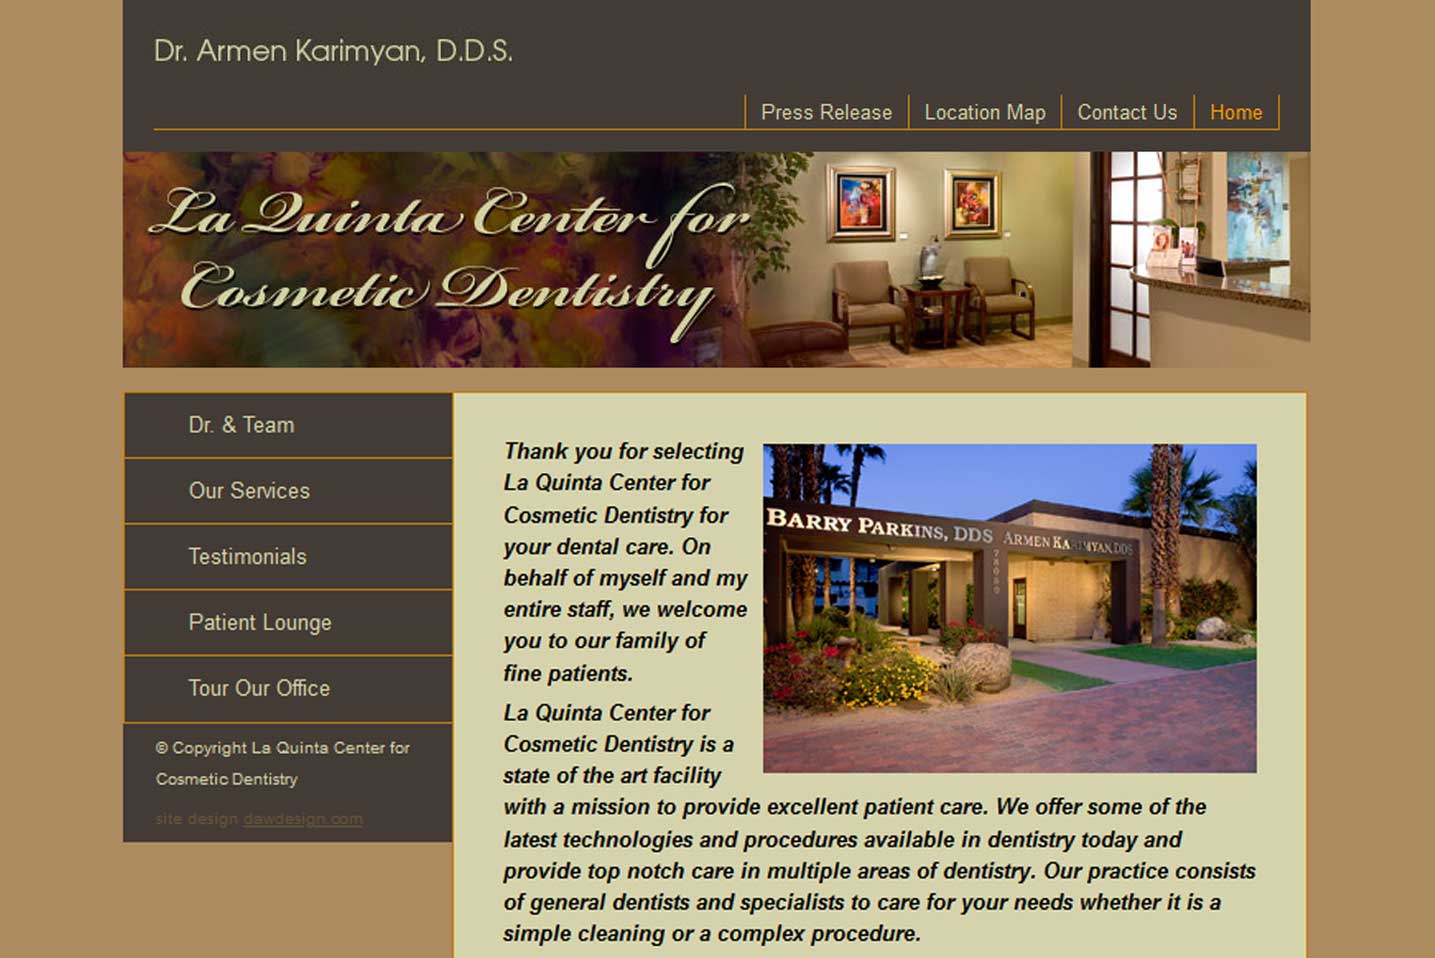 La Quinta Center for Cosmetic Dentistry